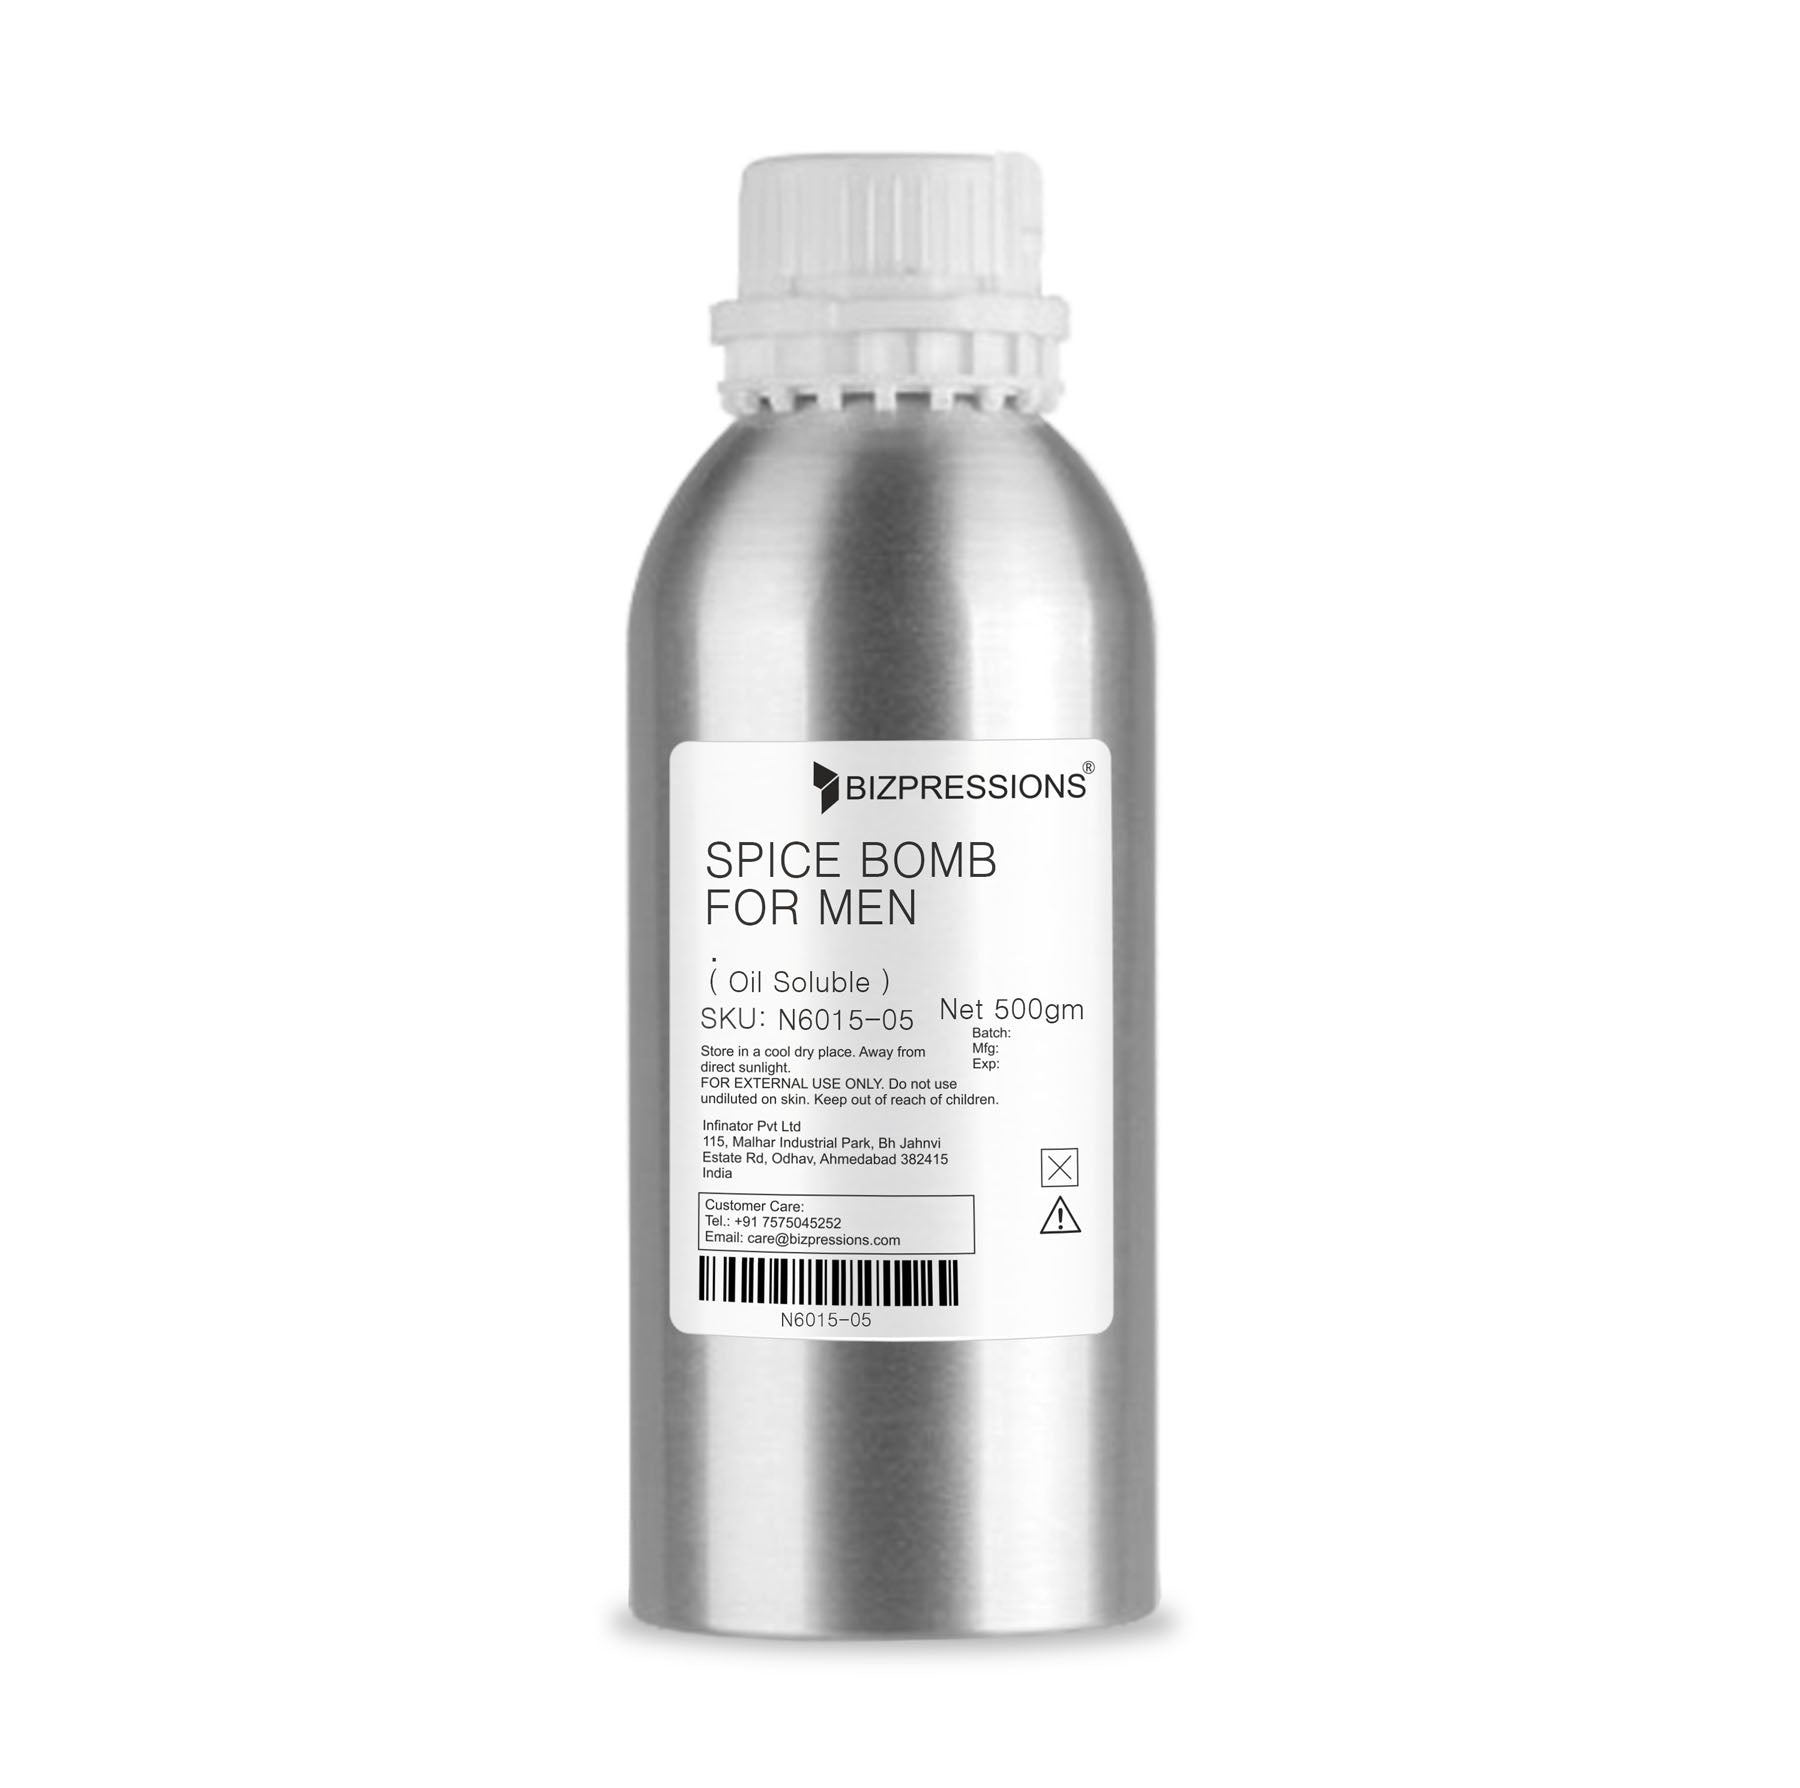 SPICE BOMB FOR MEN - Fragrance ( Oil Soluble ) - 500 gm